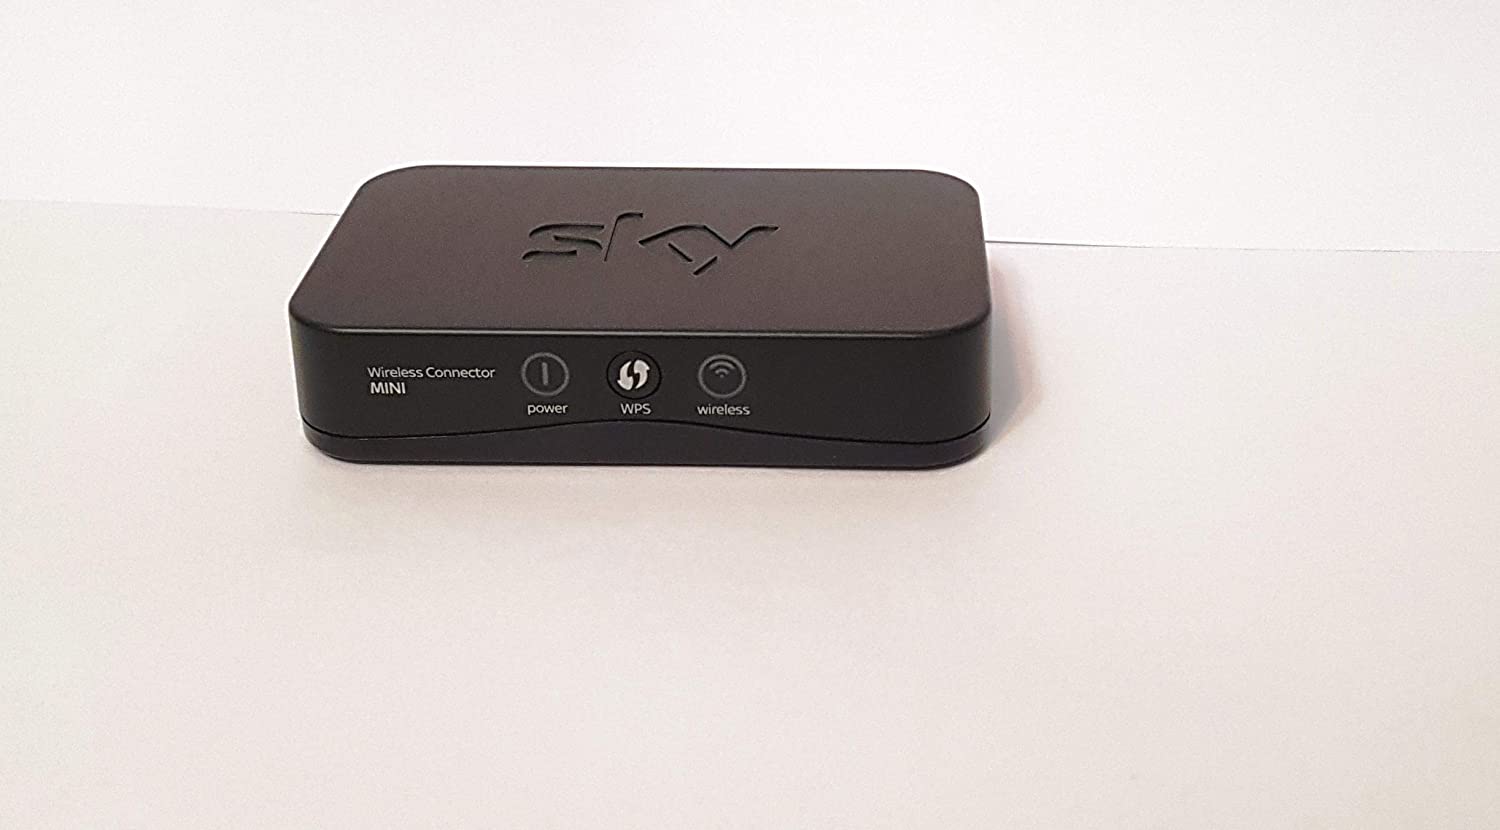 Sky SD501R Wireless Connector Mini on Demand box - Black (Refurb)